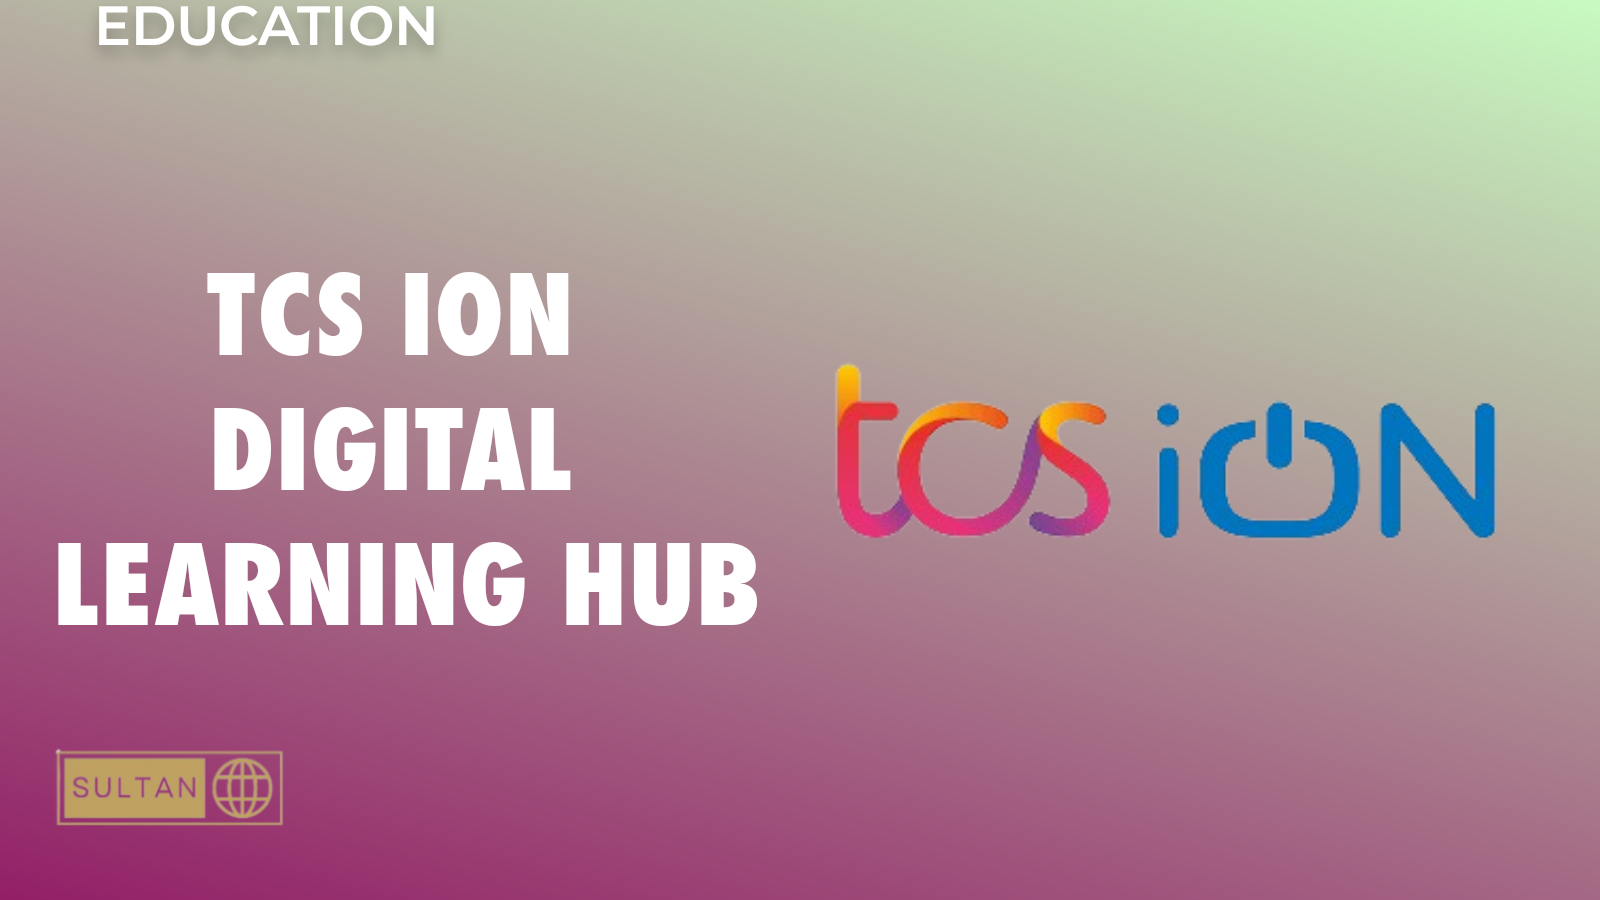 Tcs ion Digital learning hub